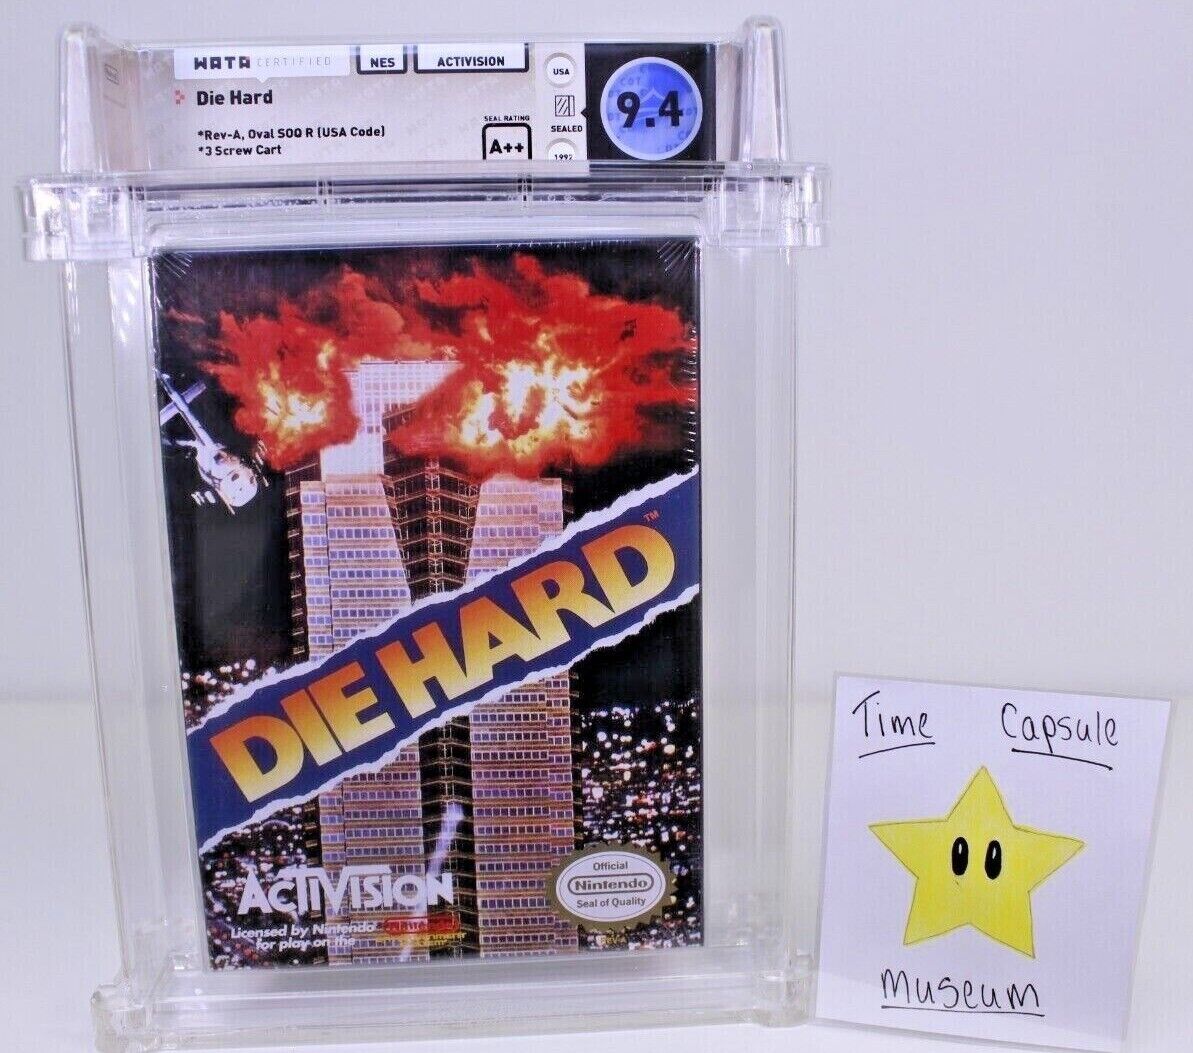 Die Hard New Nintendo NES Factory Sealed WATA VGA Grade 9.4 A++ MINT GRAIL NIB